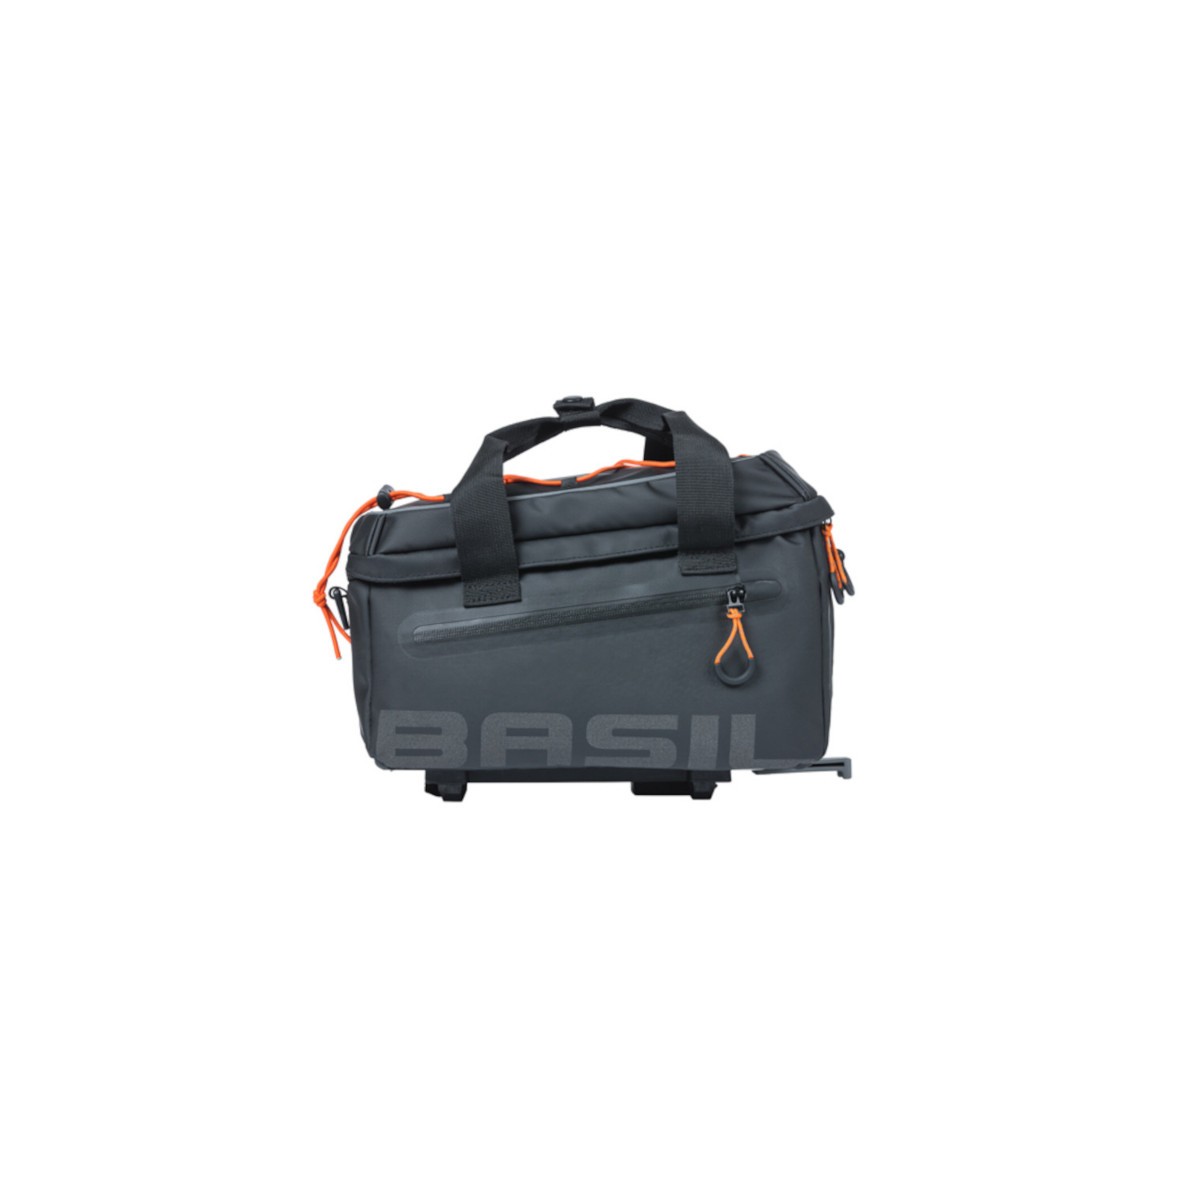 Miles Tarpaulin sac. porte-bagage MIK, 7L, noir orange